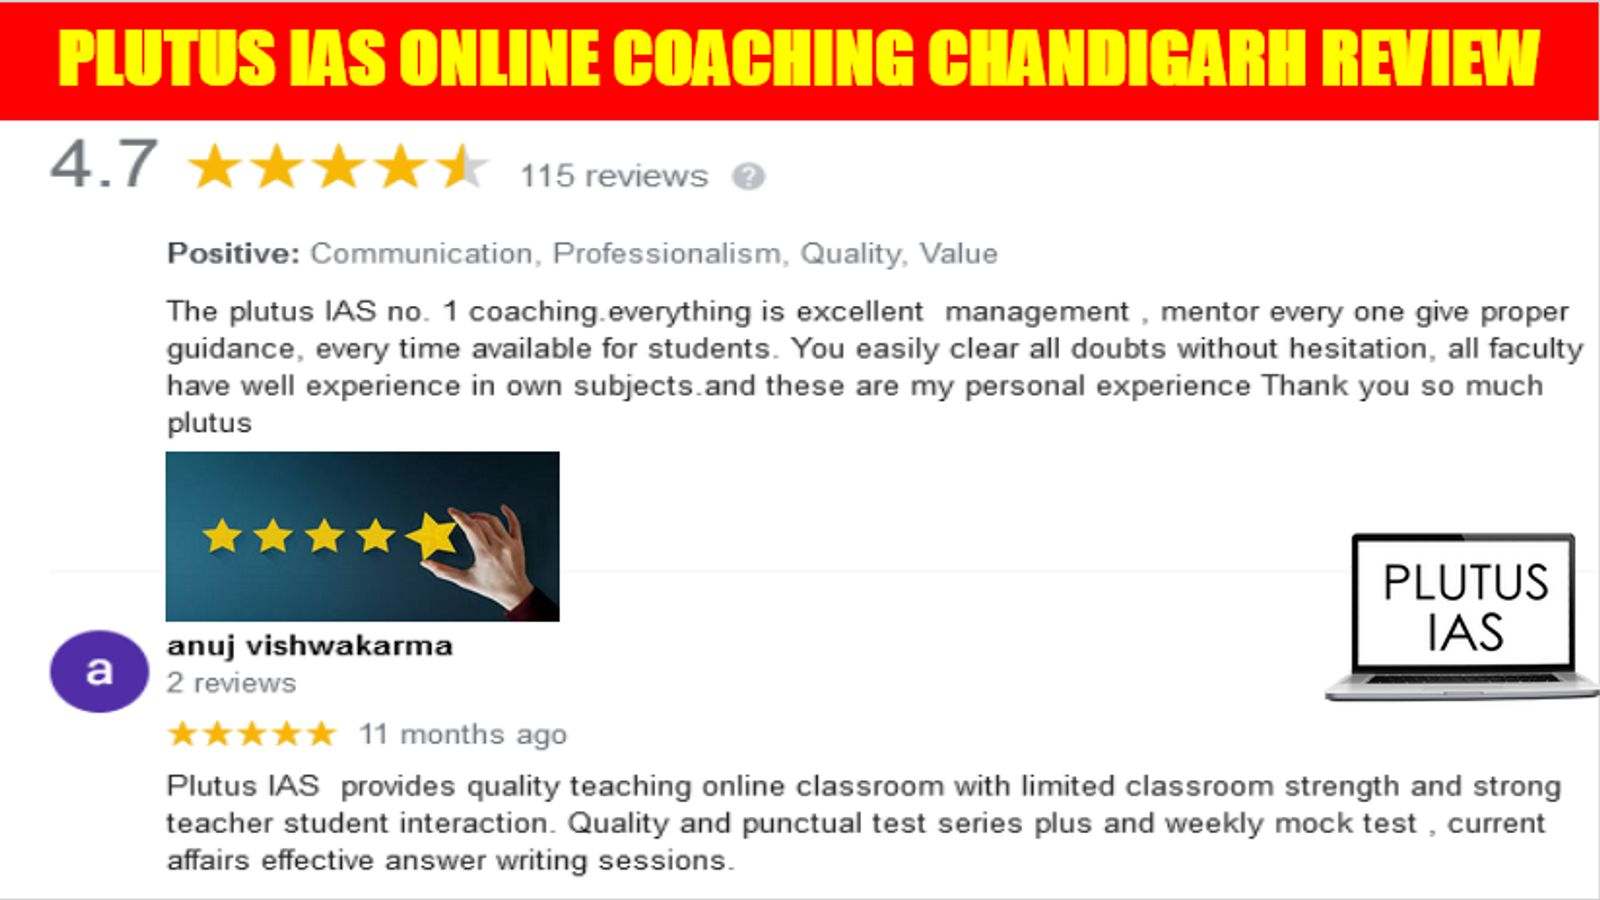 Plutus IAS Online Coaching Chandigarh Review